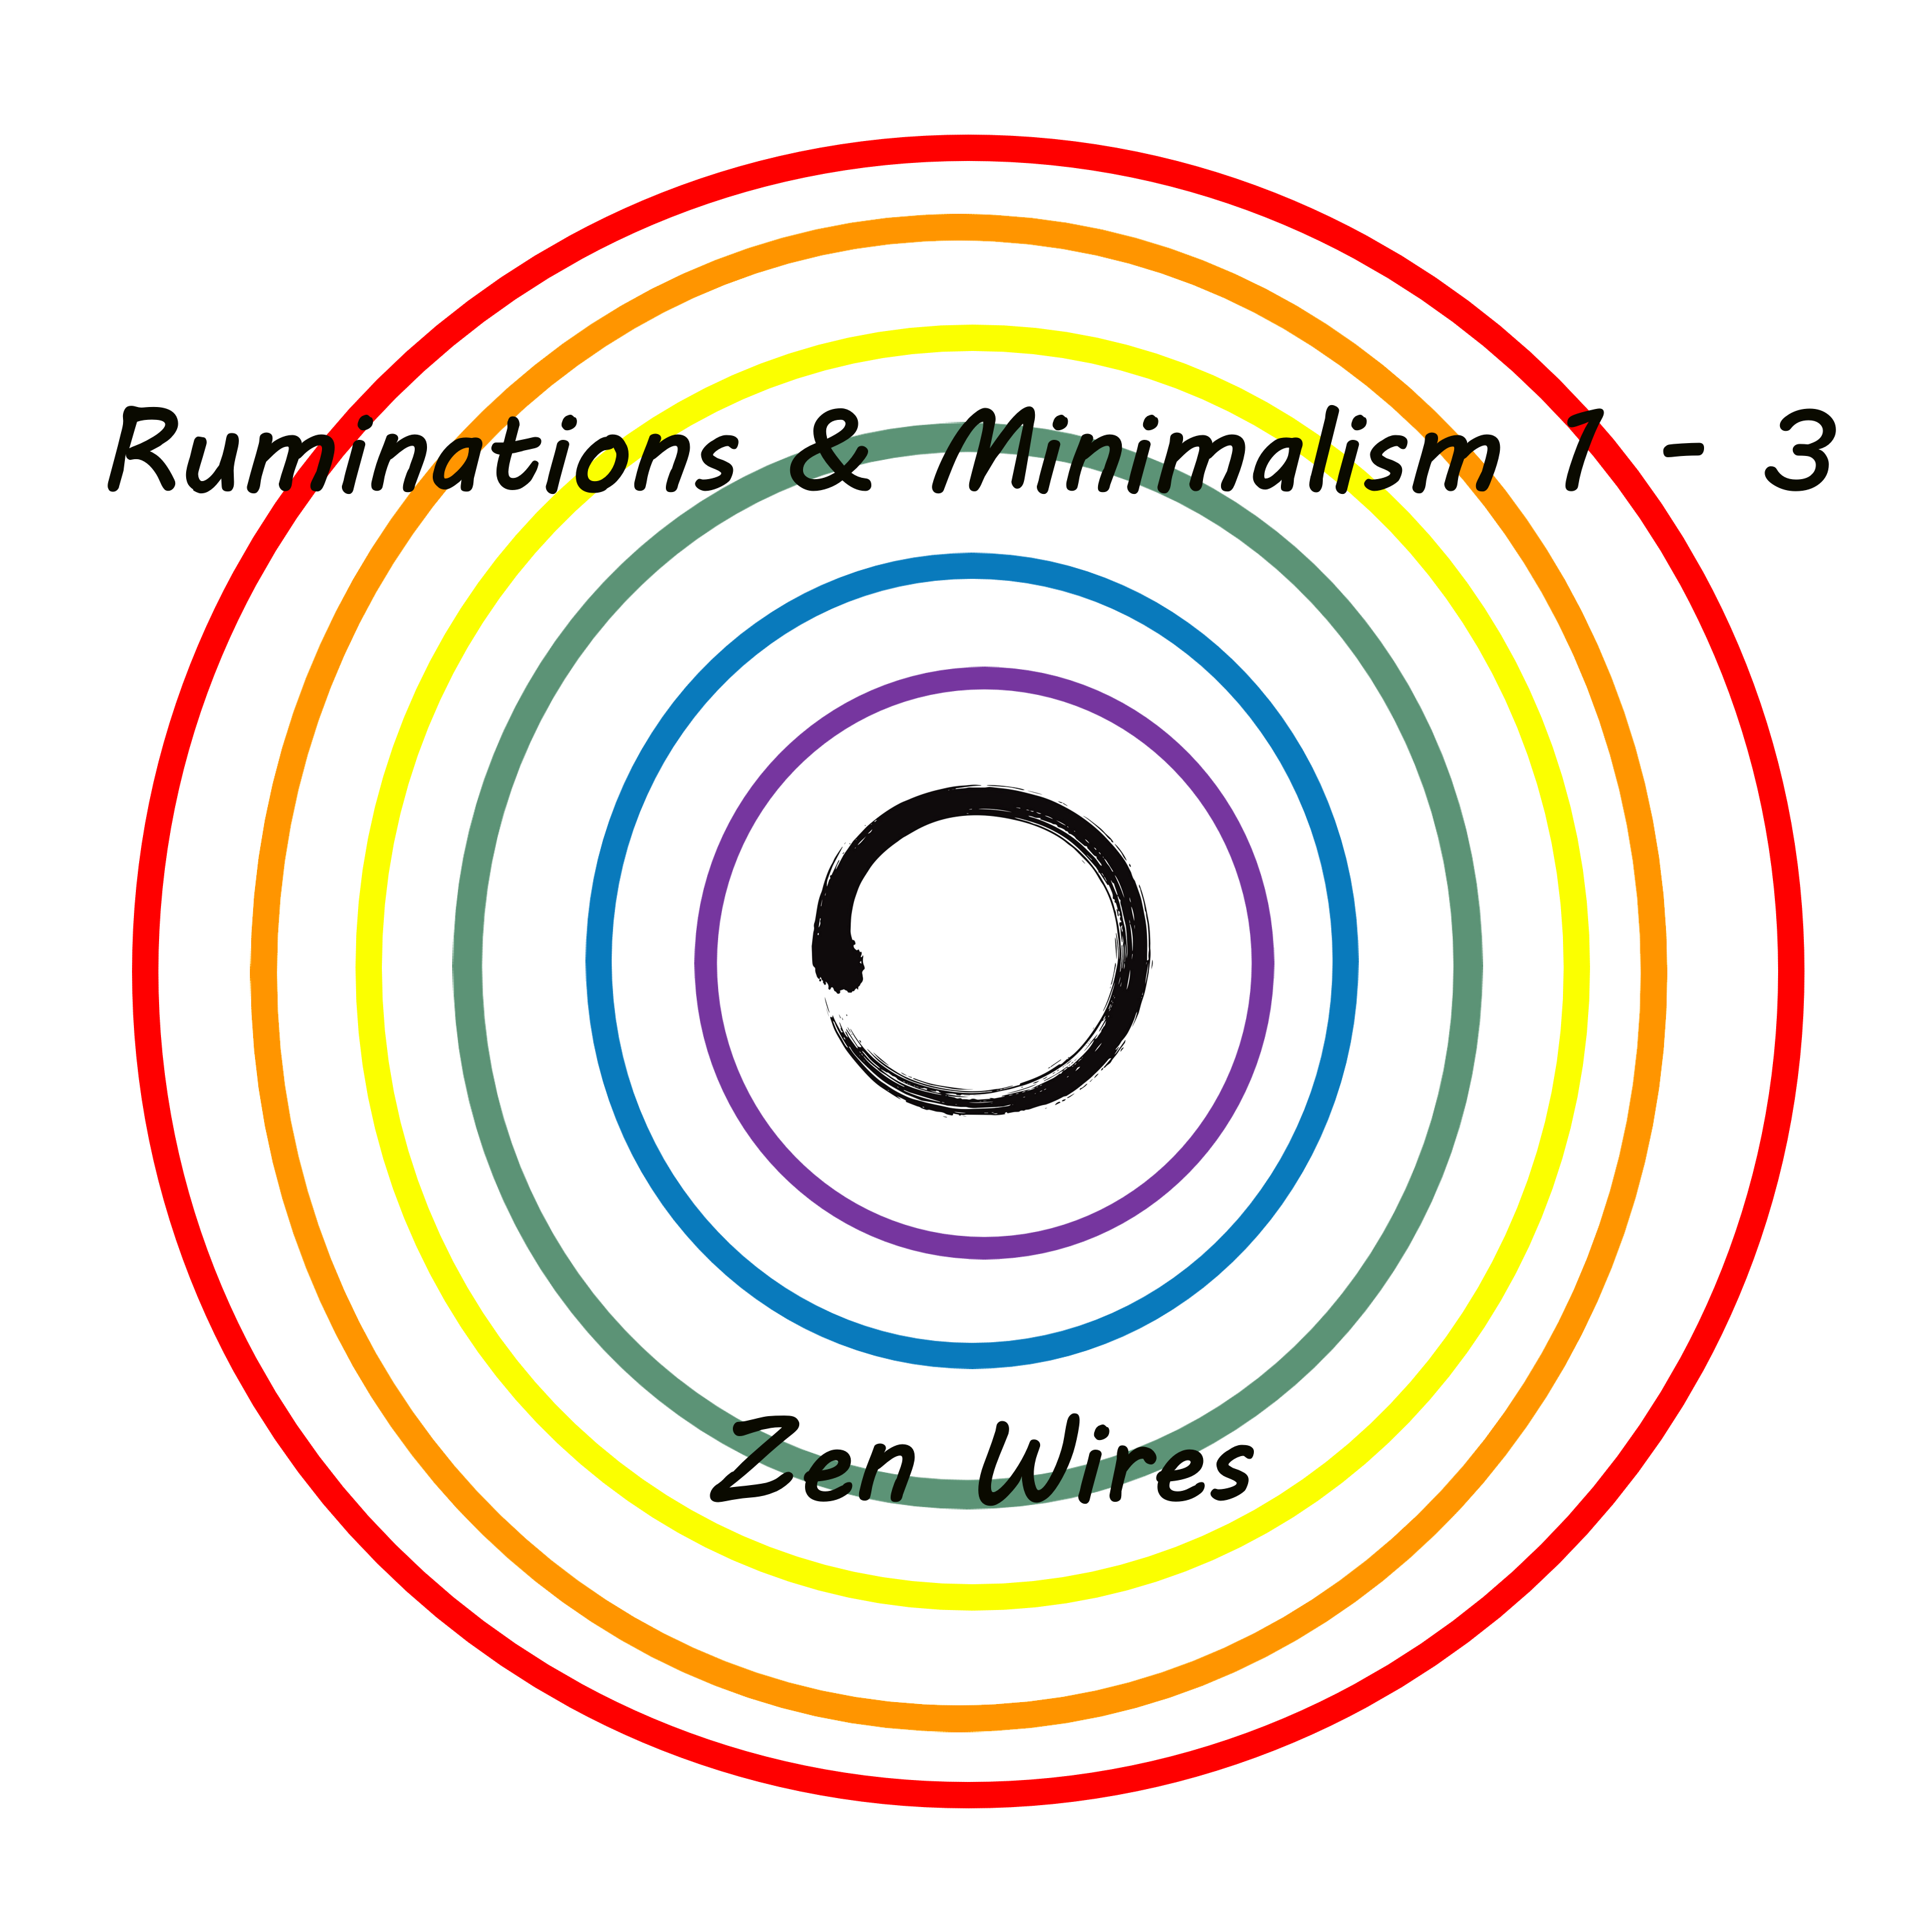 Ruminations & Minimalism 1 - 3